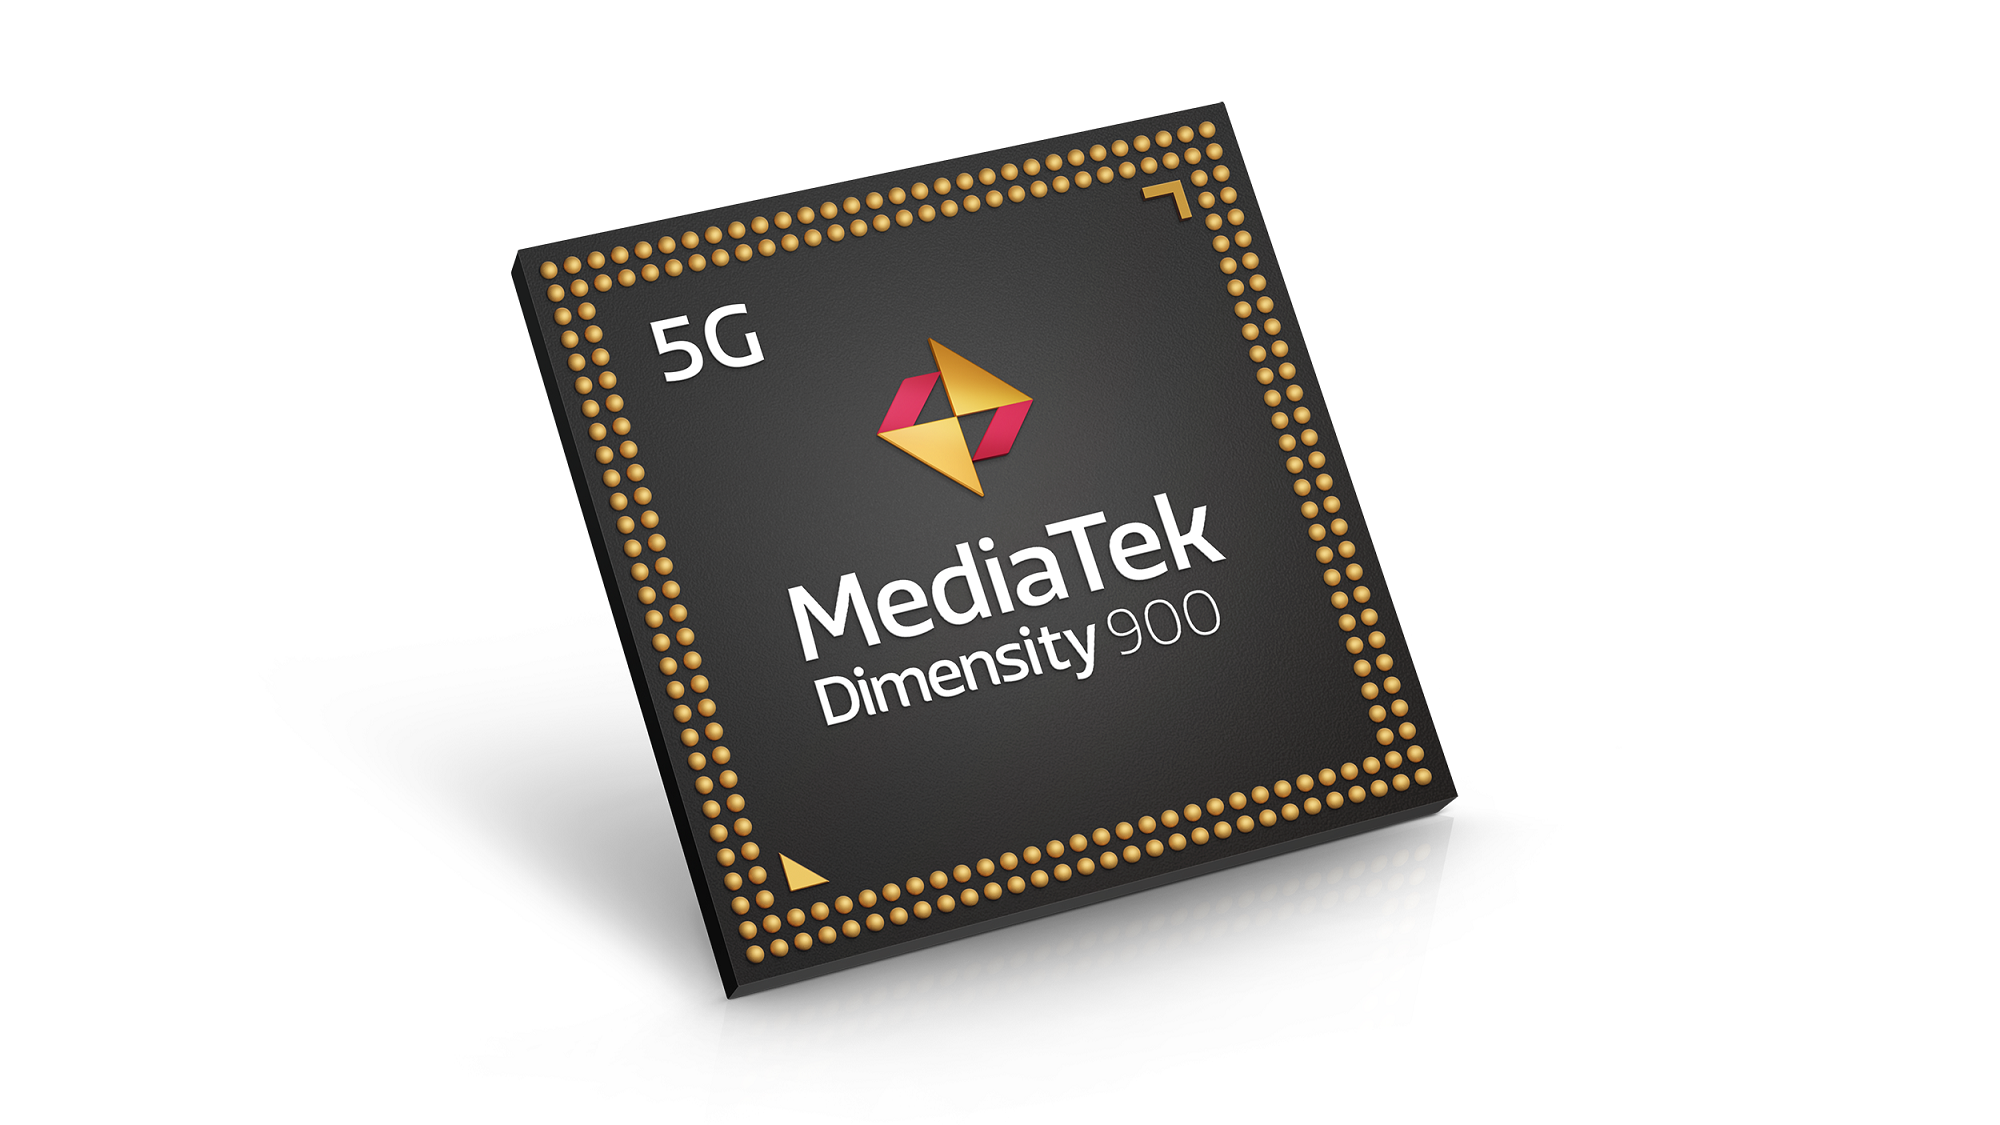 MediaTek Brings Premium Features to High Tier 5G Smartphones with New 6nm Dimensity 900 5G Chipset